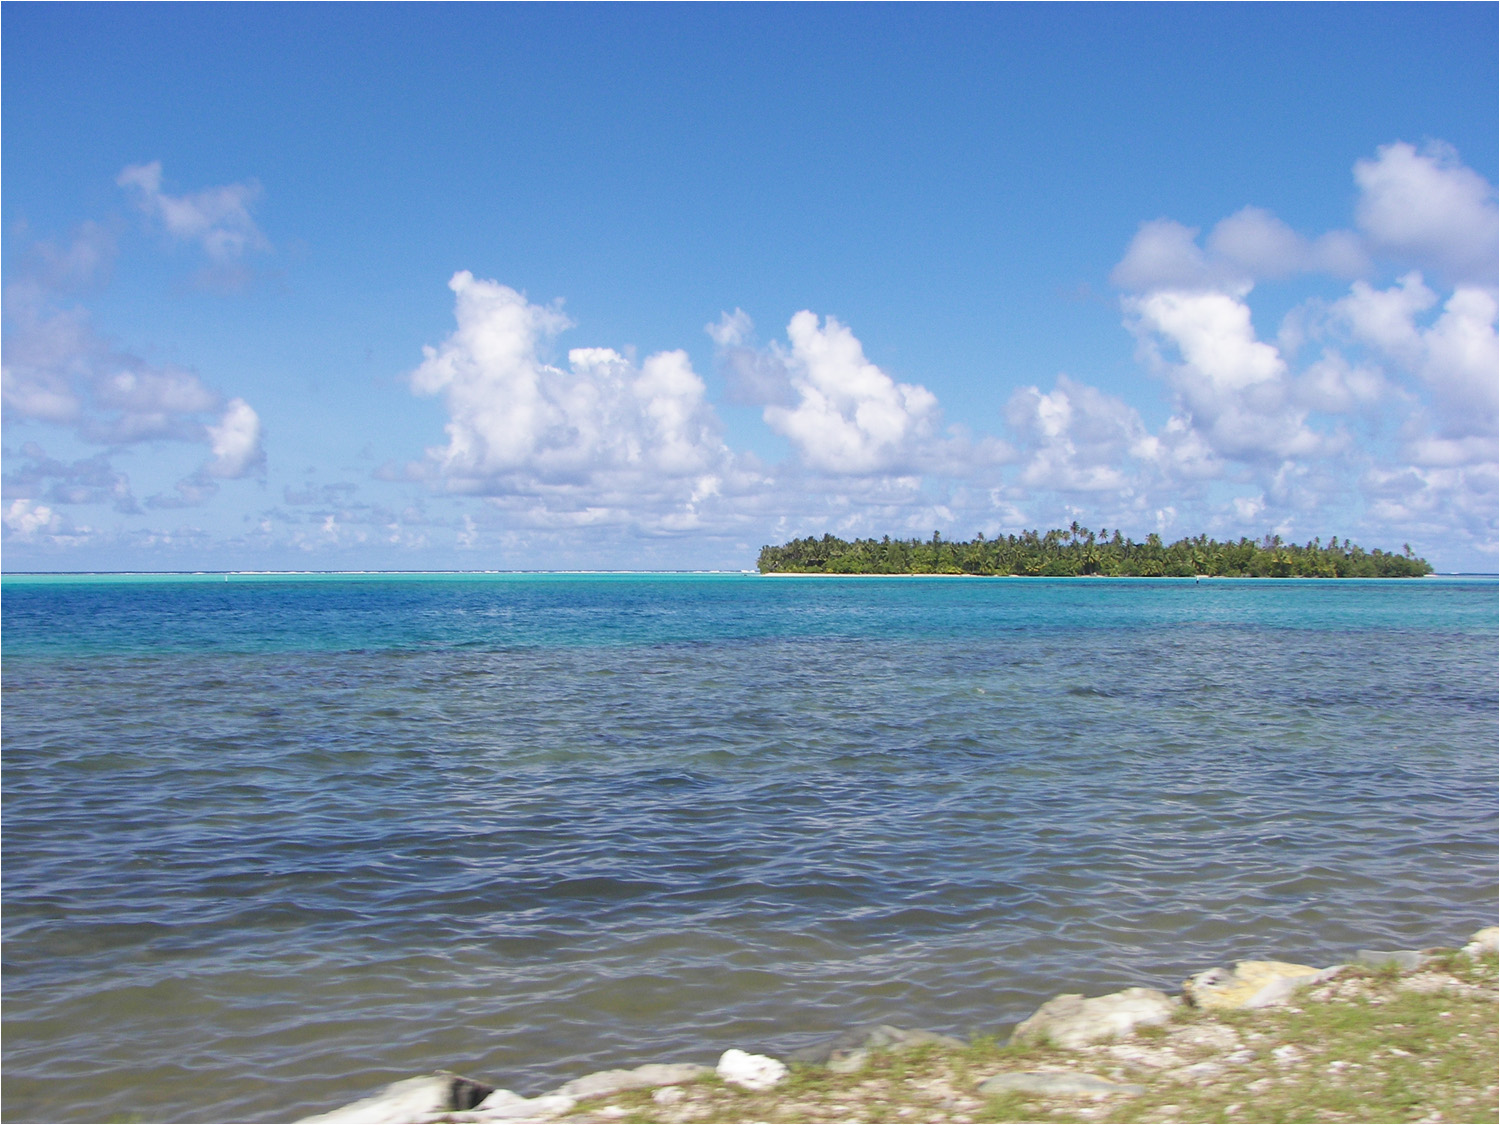 Views of the lagoon from Huahine Iti